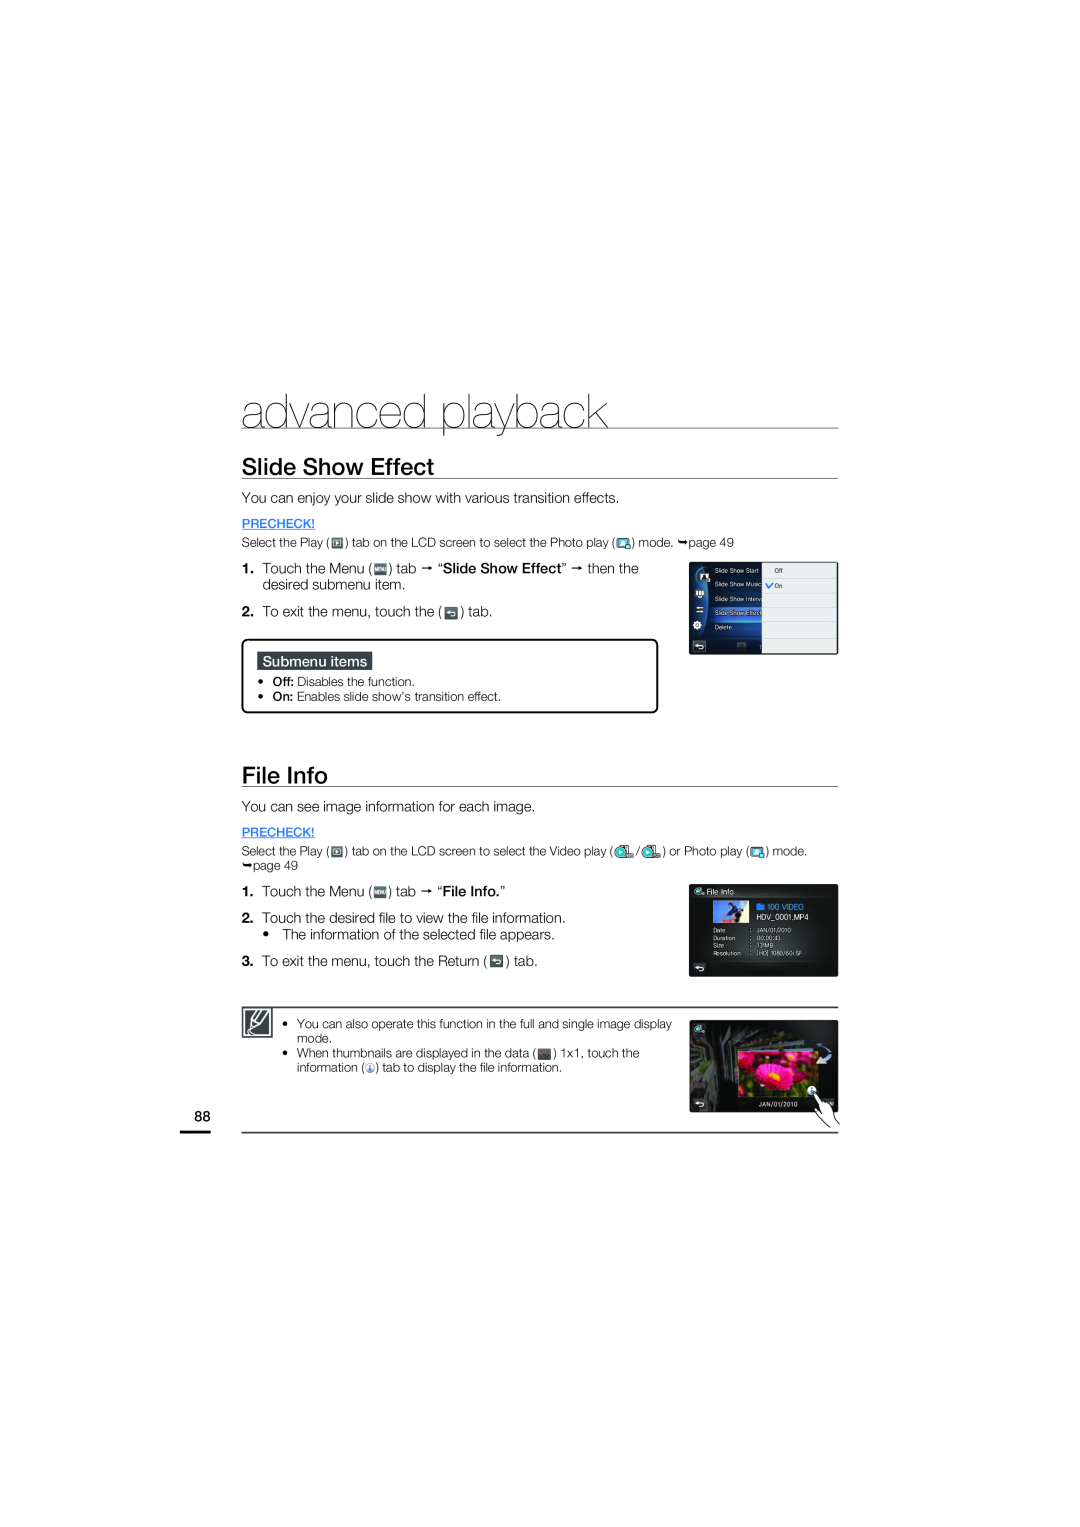 Samsung HMX-S15BN/XAA, HMX-S10BN/XAA manual Slide Show Effect, File Info, advanced playback, Submenu items 